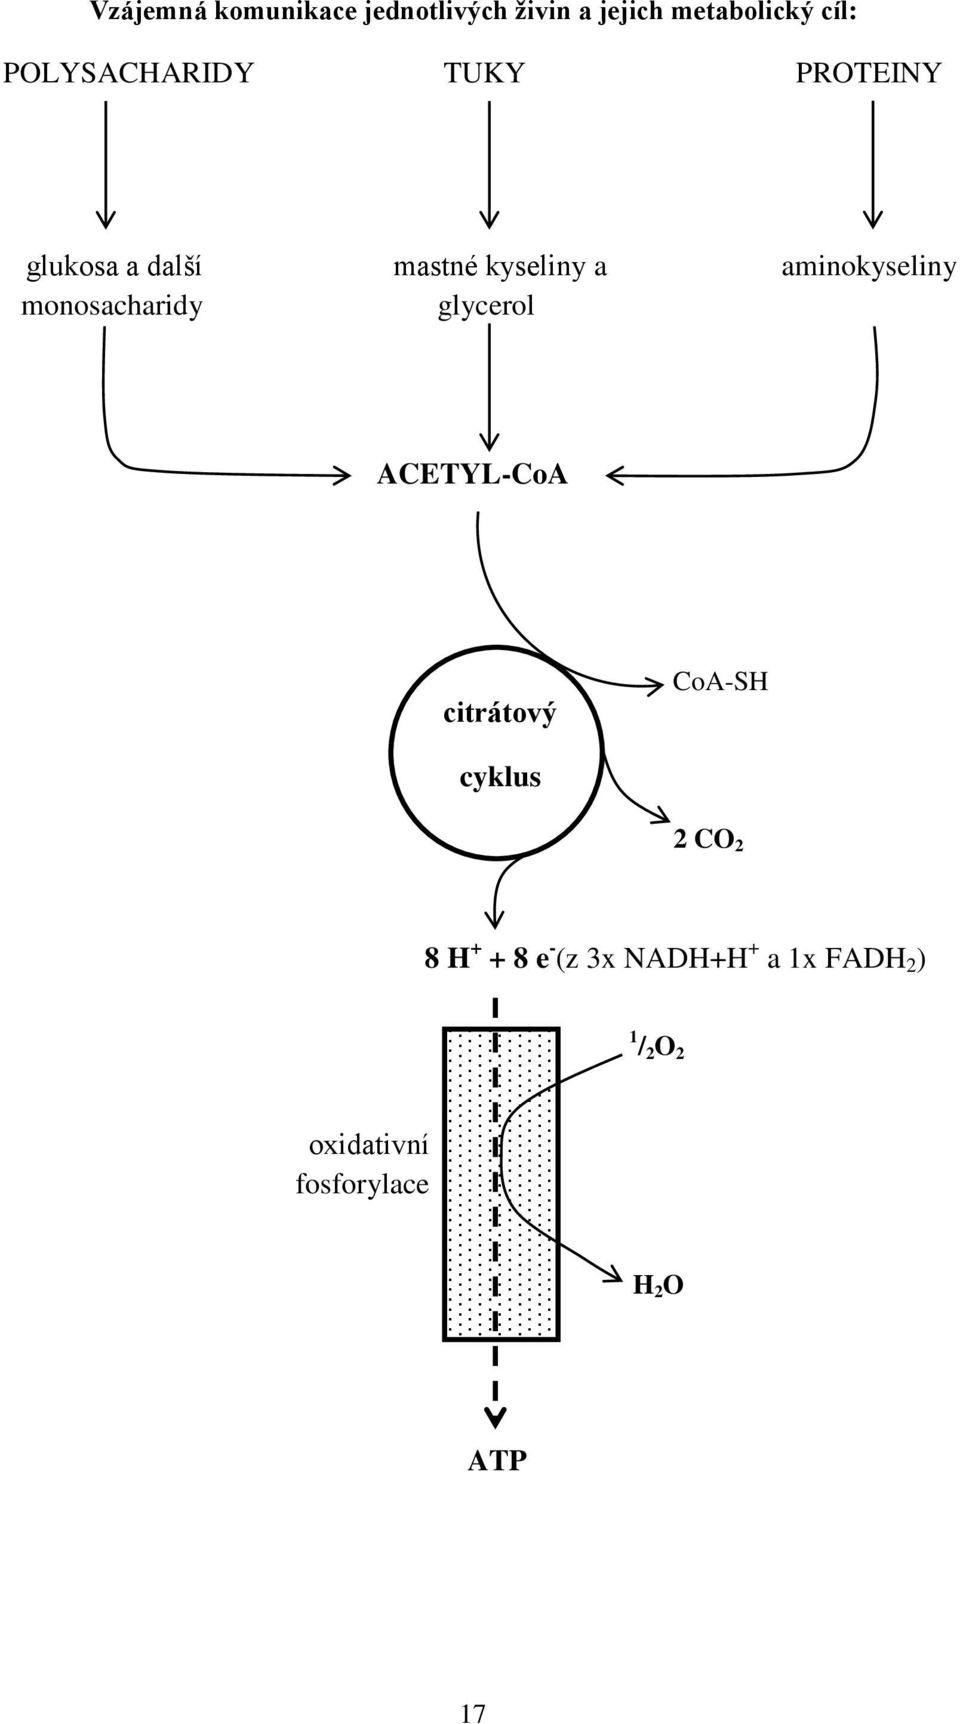 aminokyseliny monosacharidy glycerol ACETYL-CoA citrátový CoA-SH cyklus 2